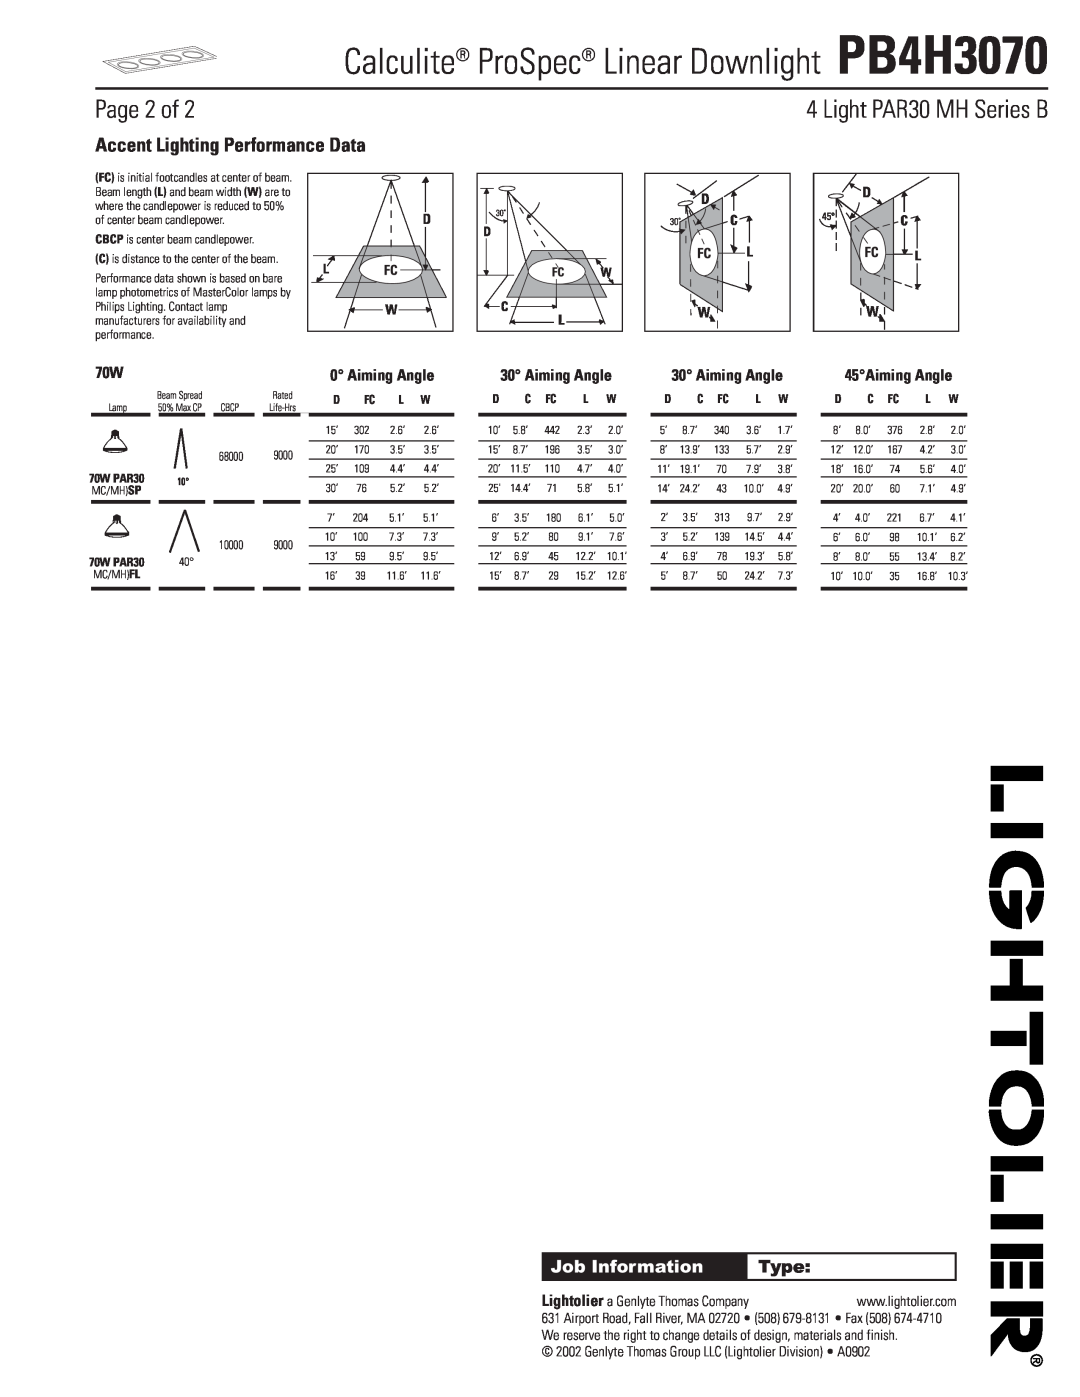 Lightolier Page 2 of, Accent Lighting Performance Data, Calculite ProSpec Linear Downlight PB4H3070, Job Information 